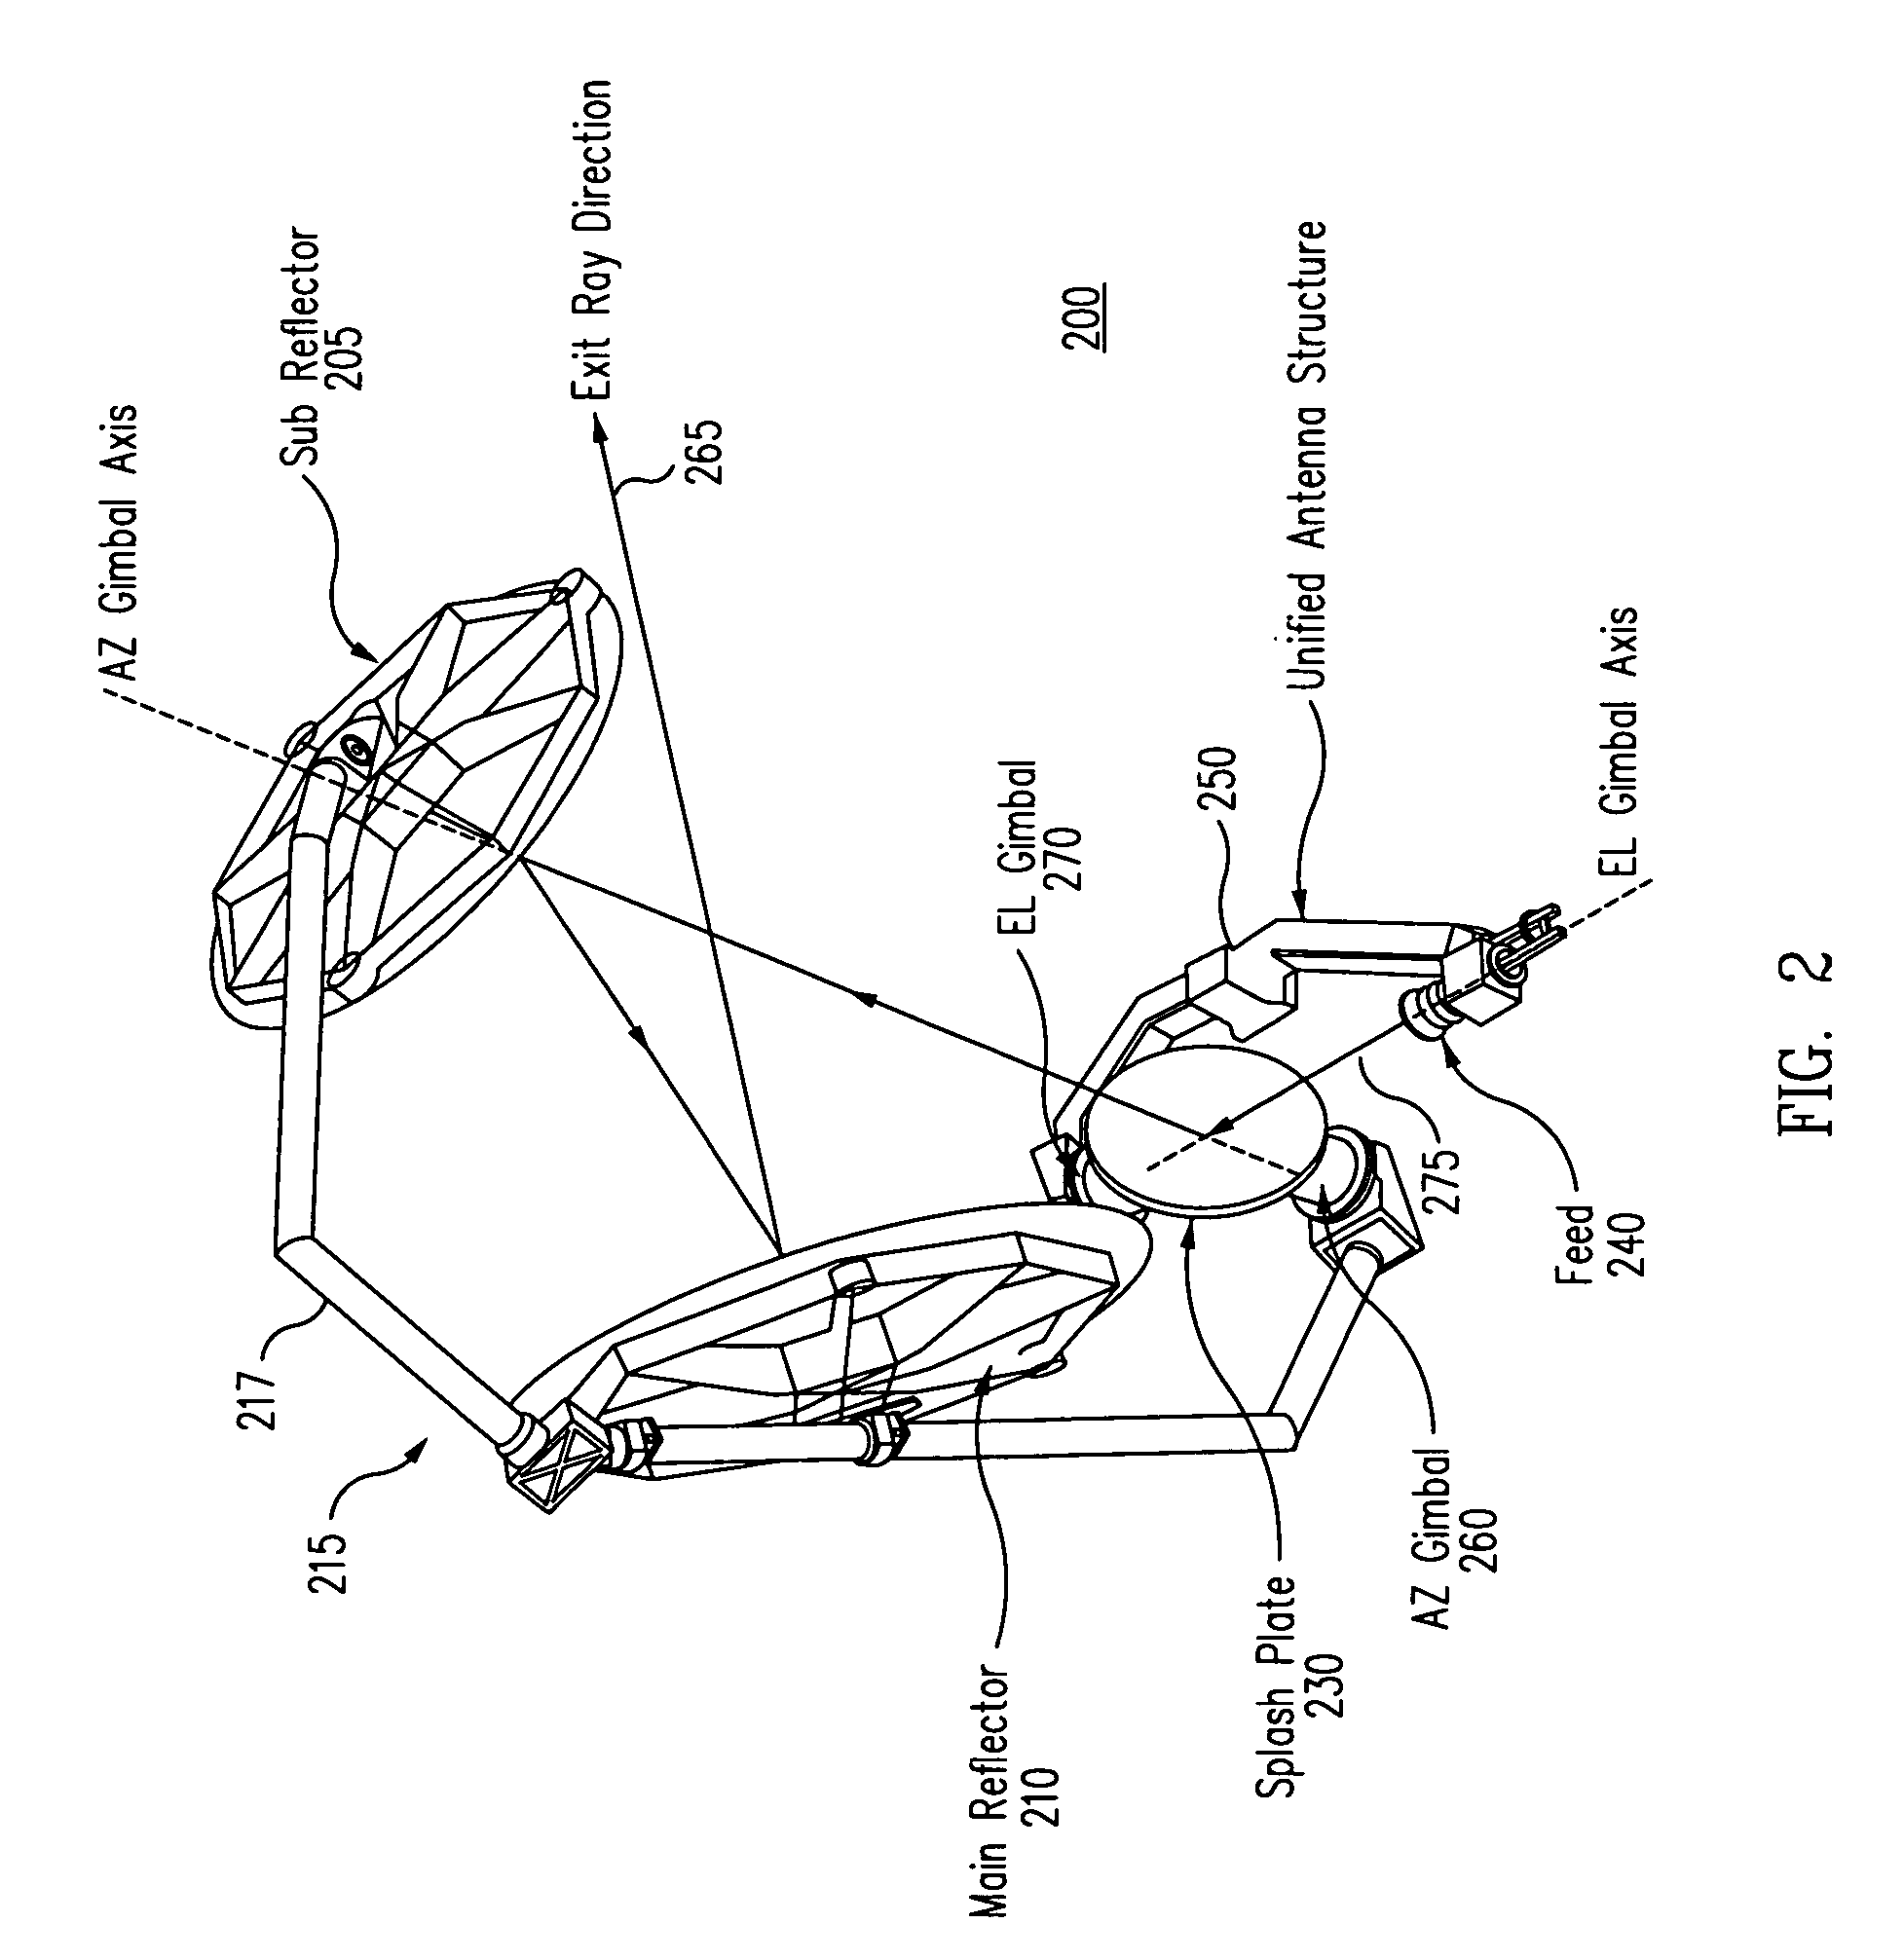 Gimbaled dragonian antenna